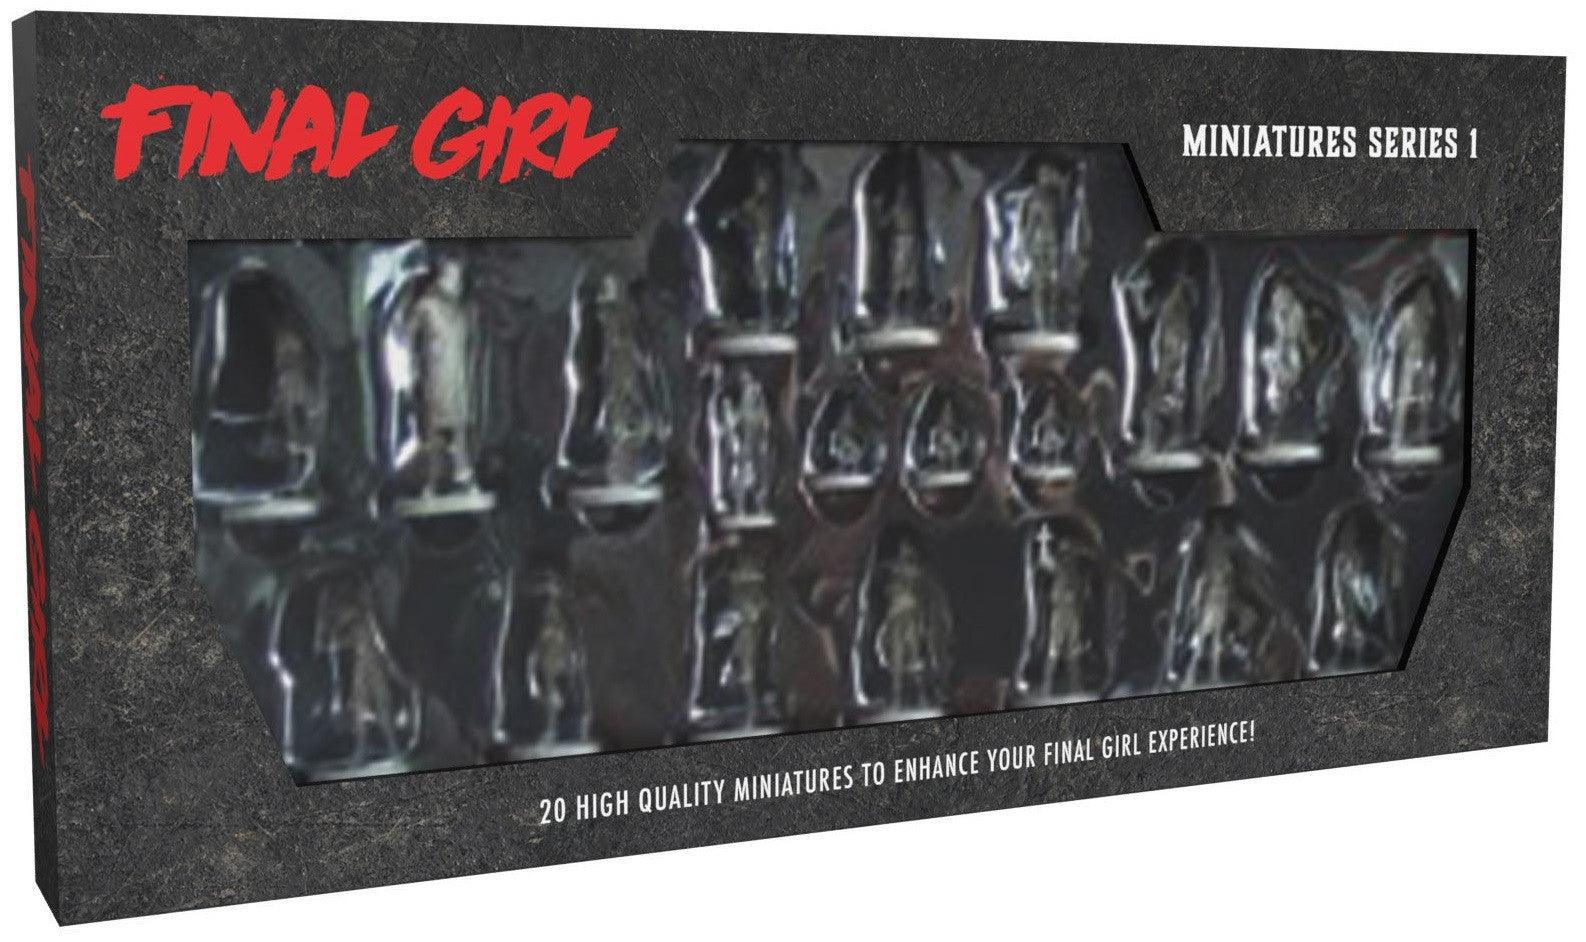 VR-100138 Final Girl Miniatures Box Series 1 - Van Ryder Games - Titan Pop Culture